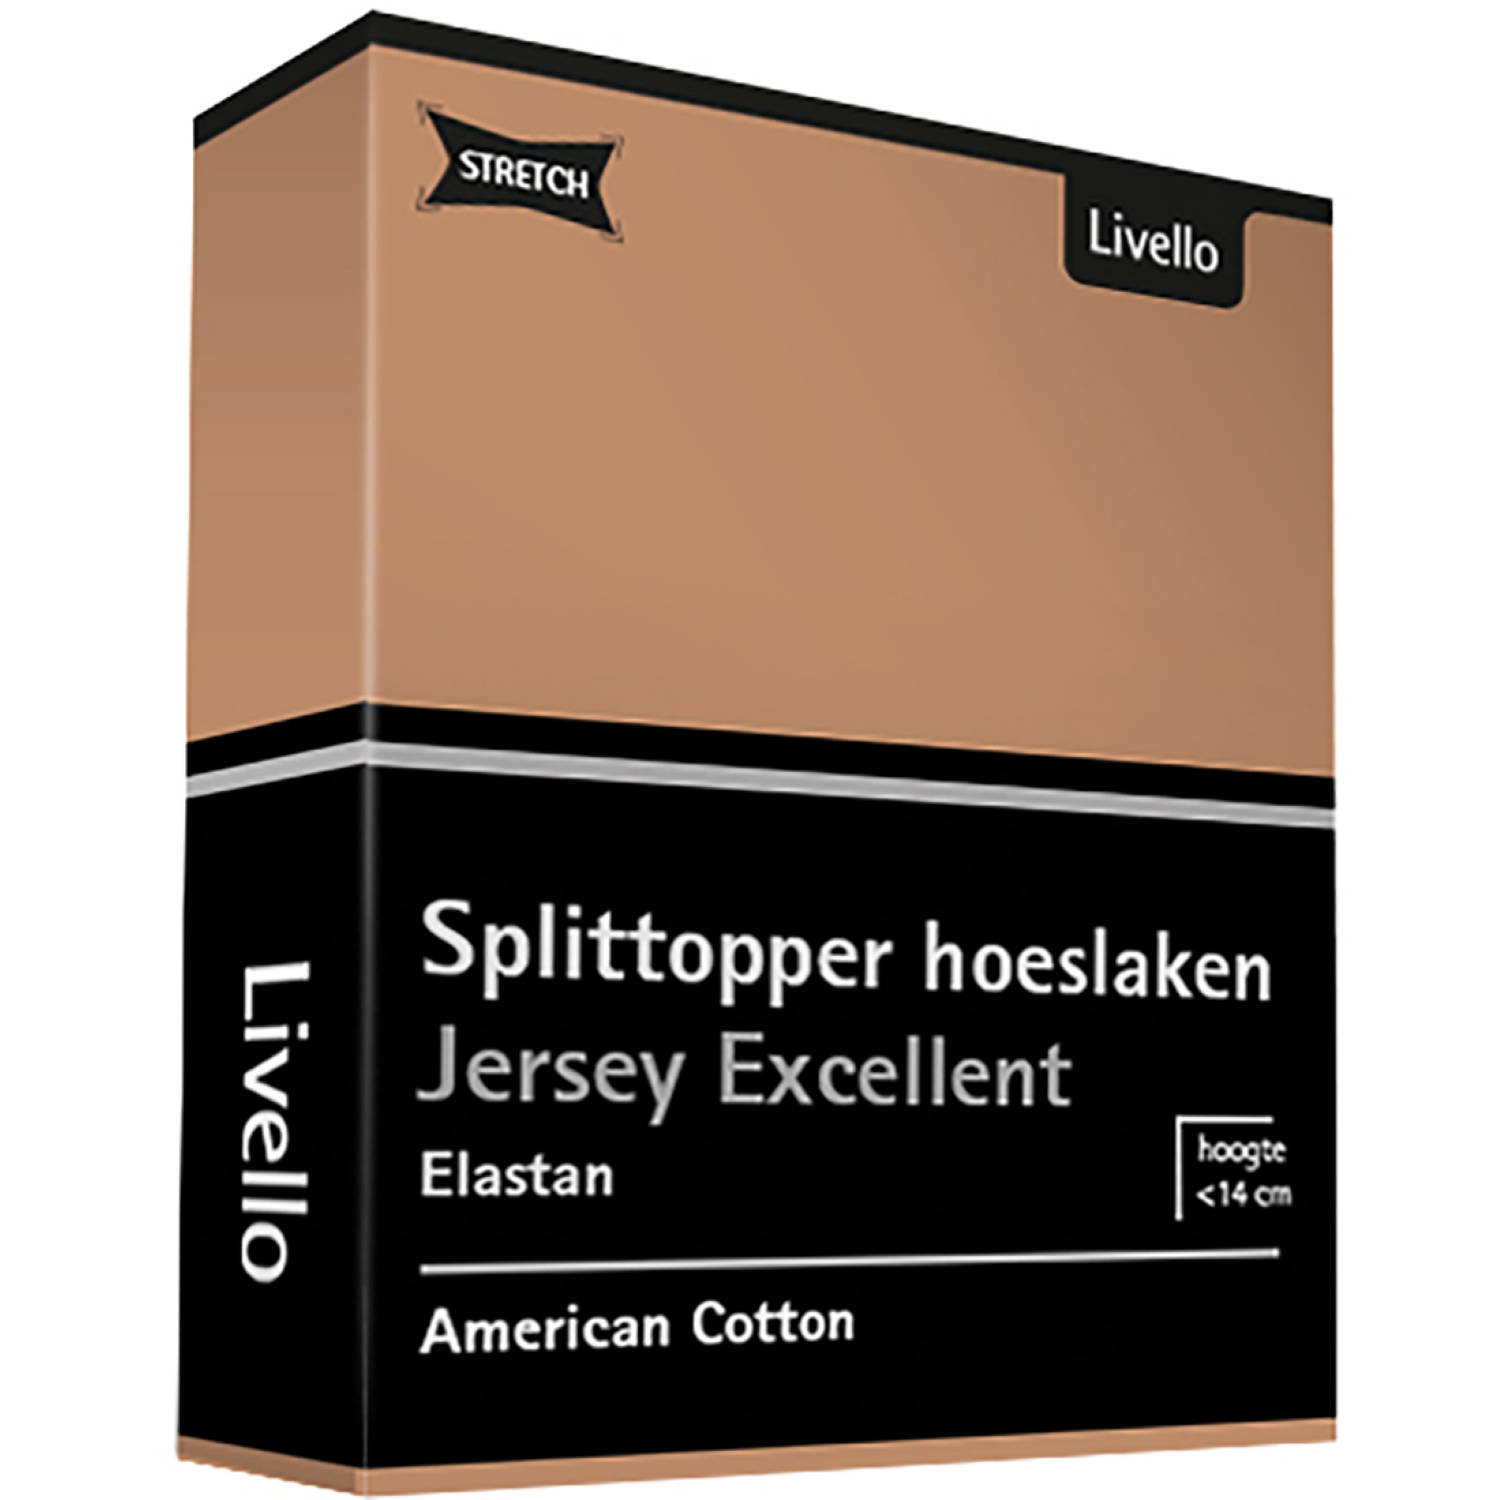 Livello Hoeslaken Splittopper Jersey Excellent Caramel 140 x 200 cm